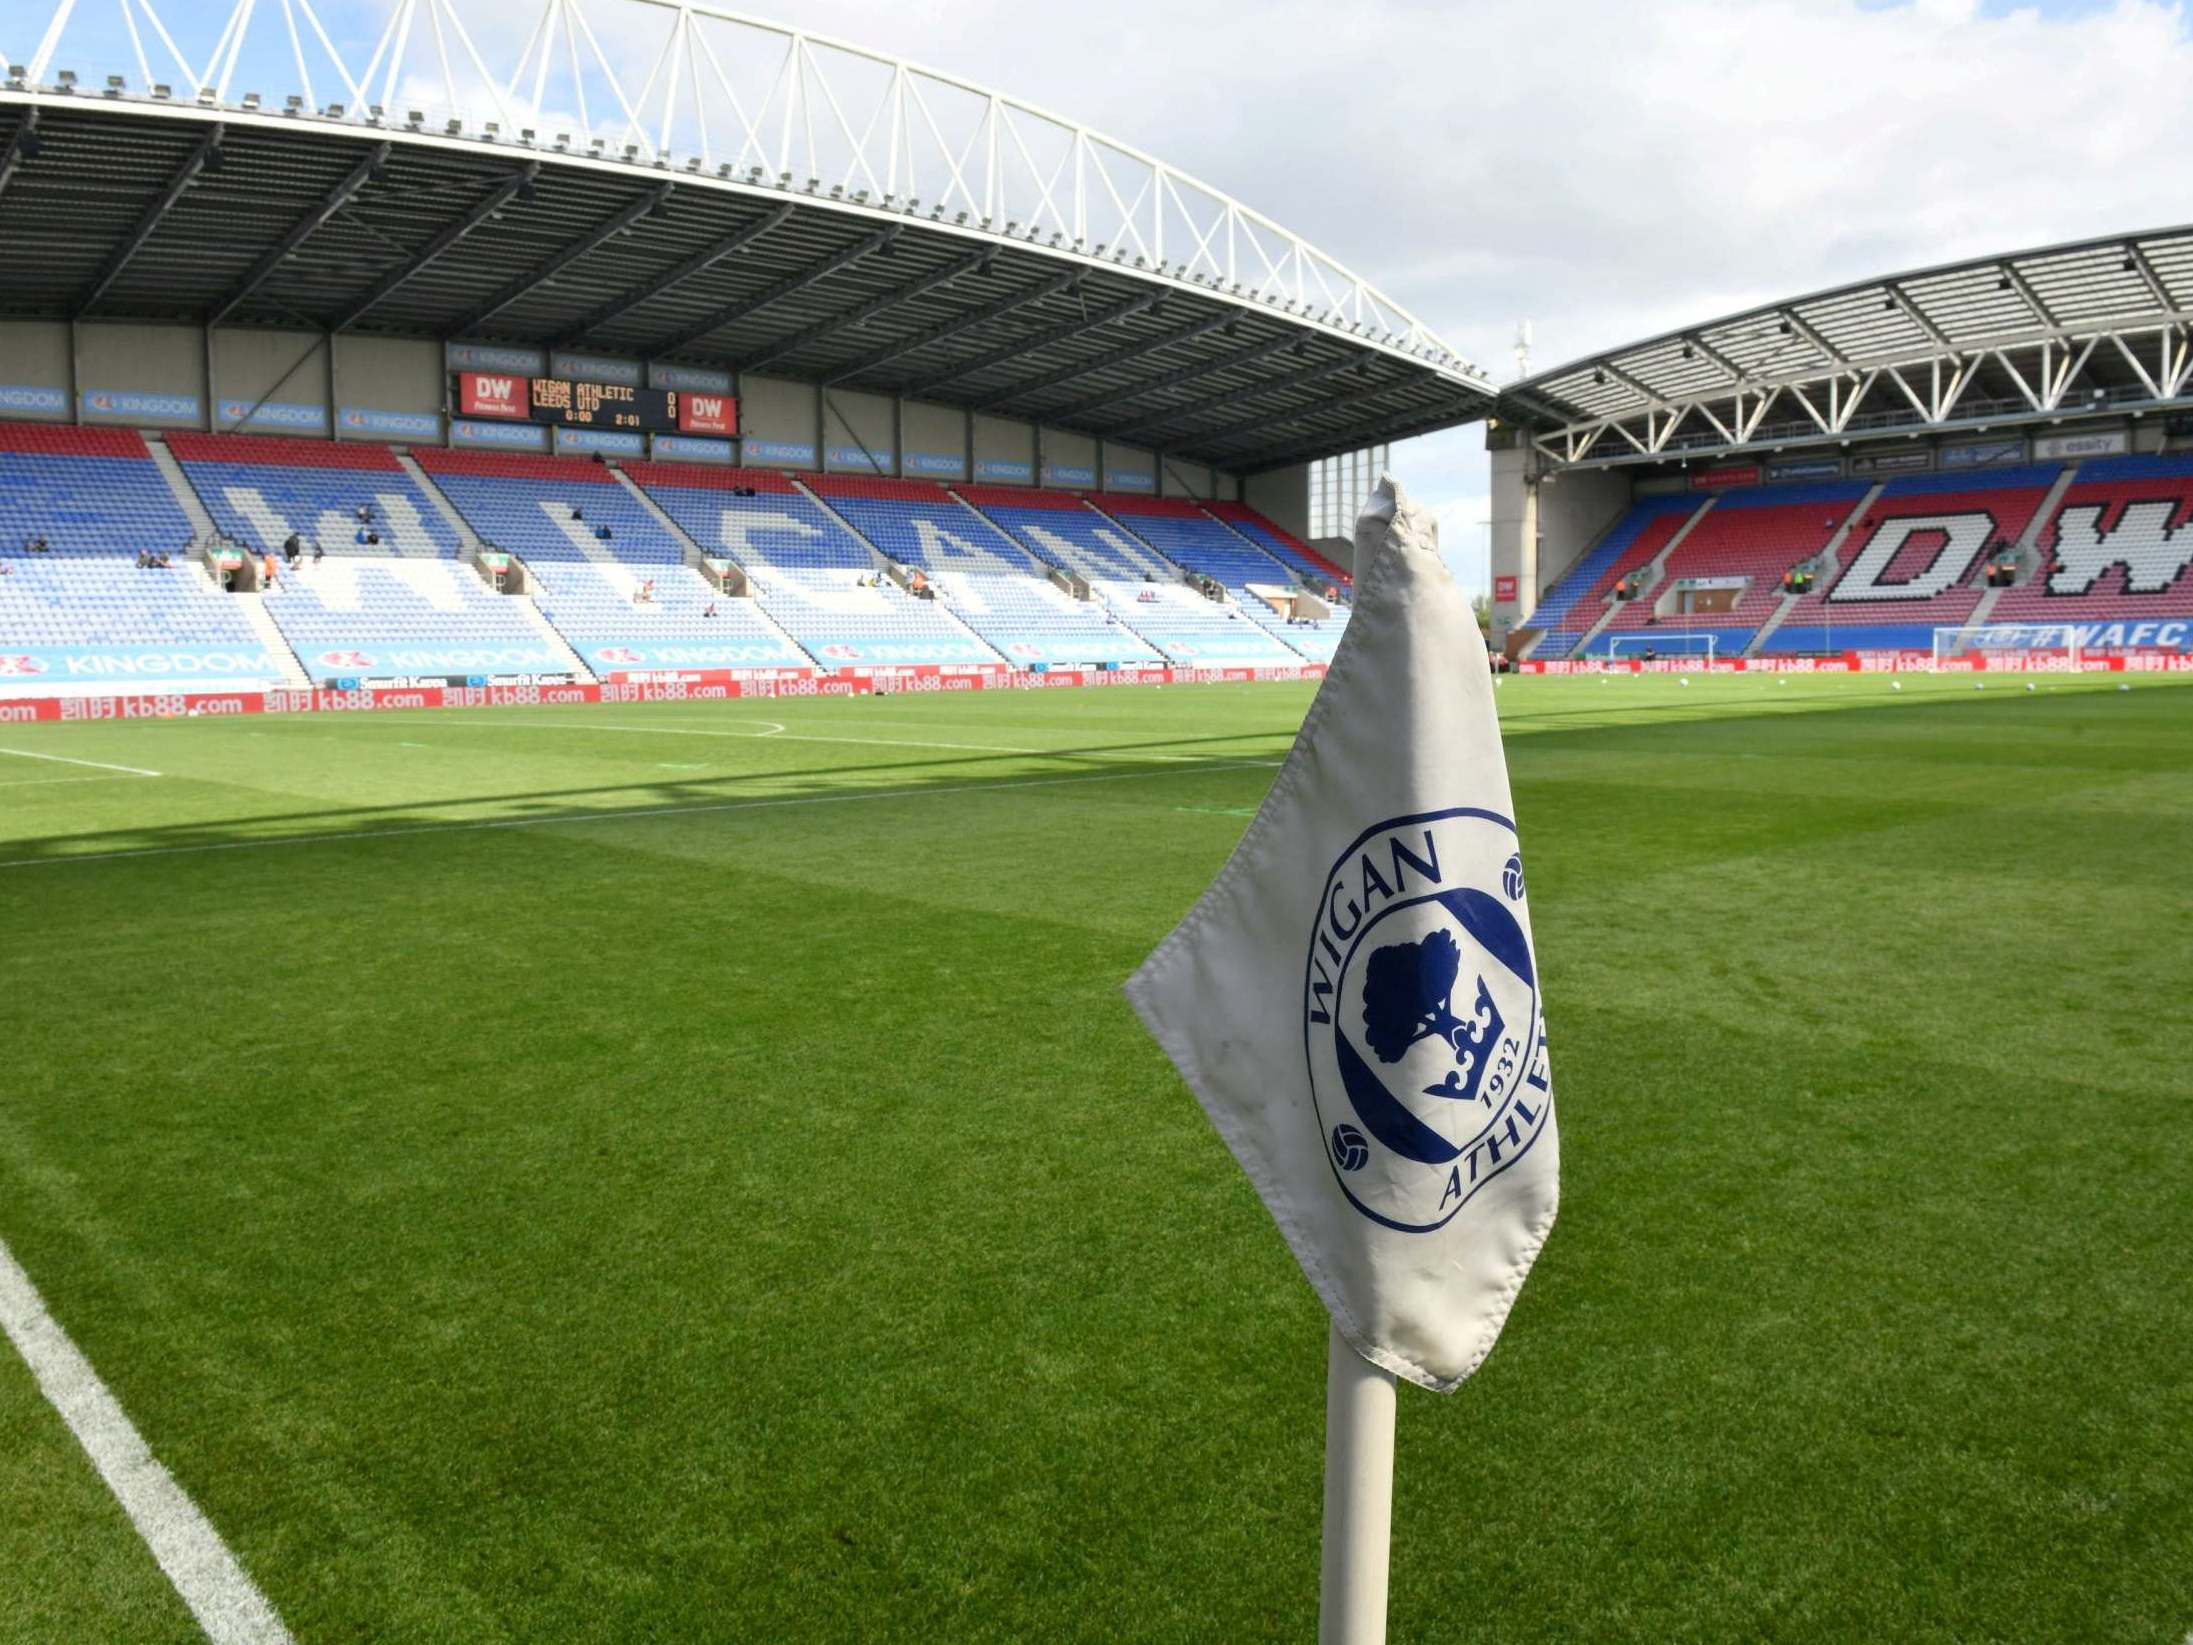 Wigan Athletic were placed in administration overnight in an 'unprecedented' scenario